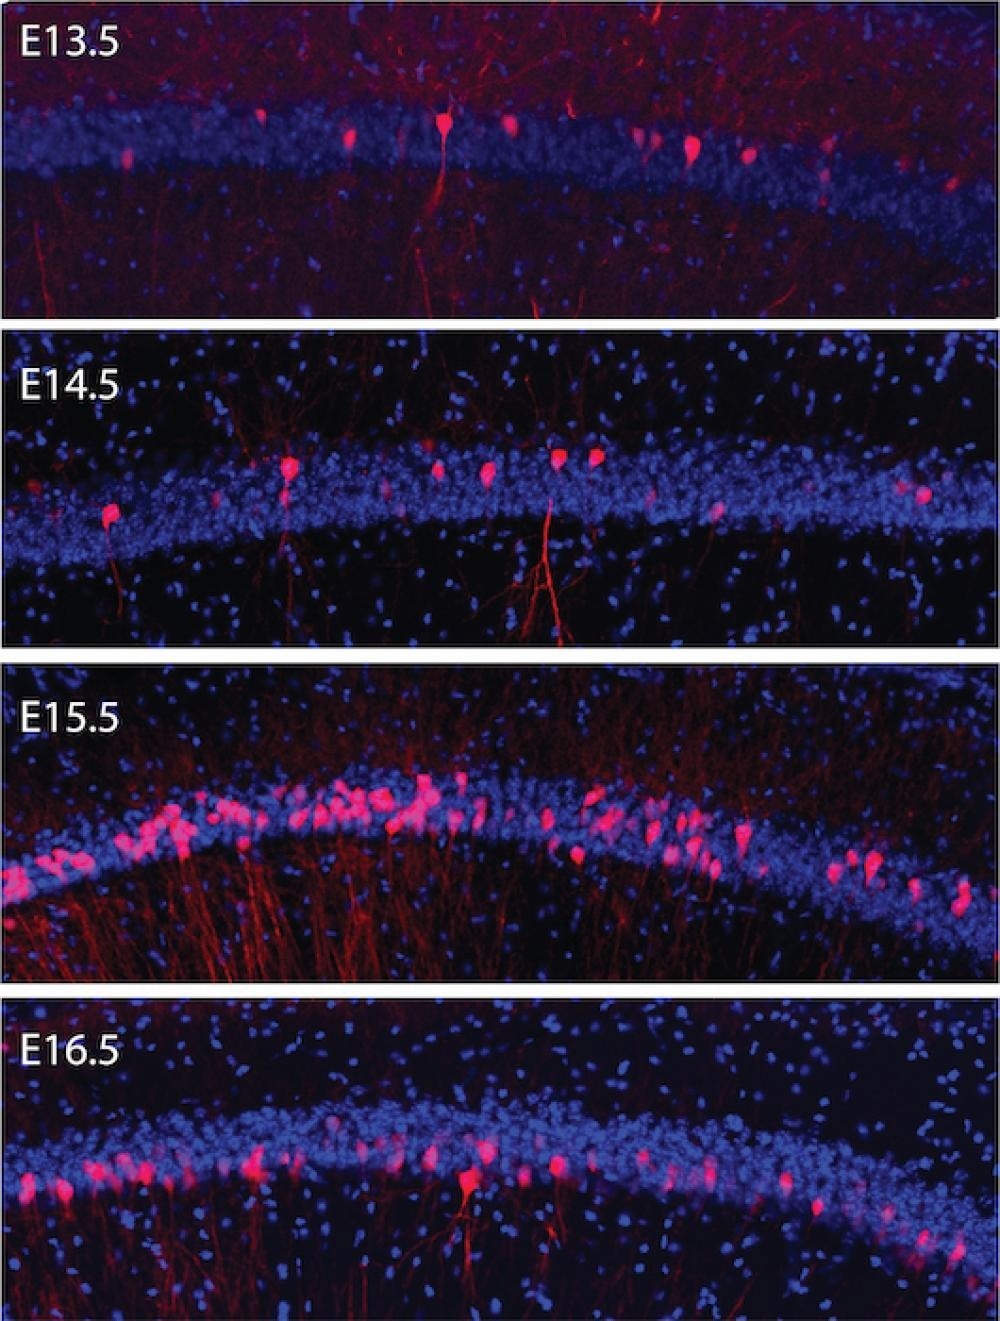 Brain cells with the same birthdate display distinct connectivity